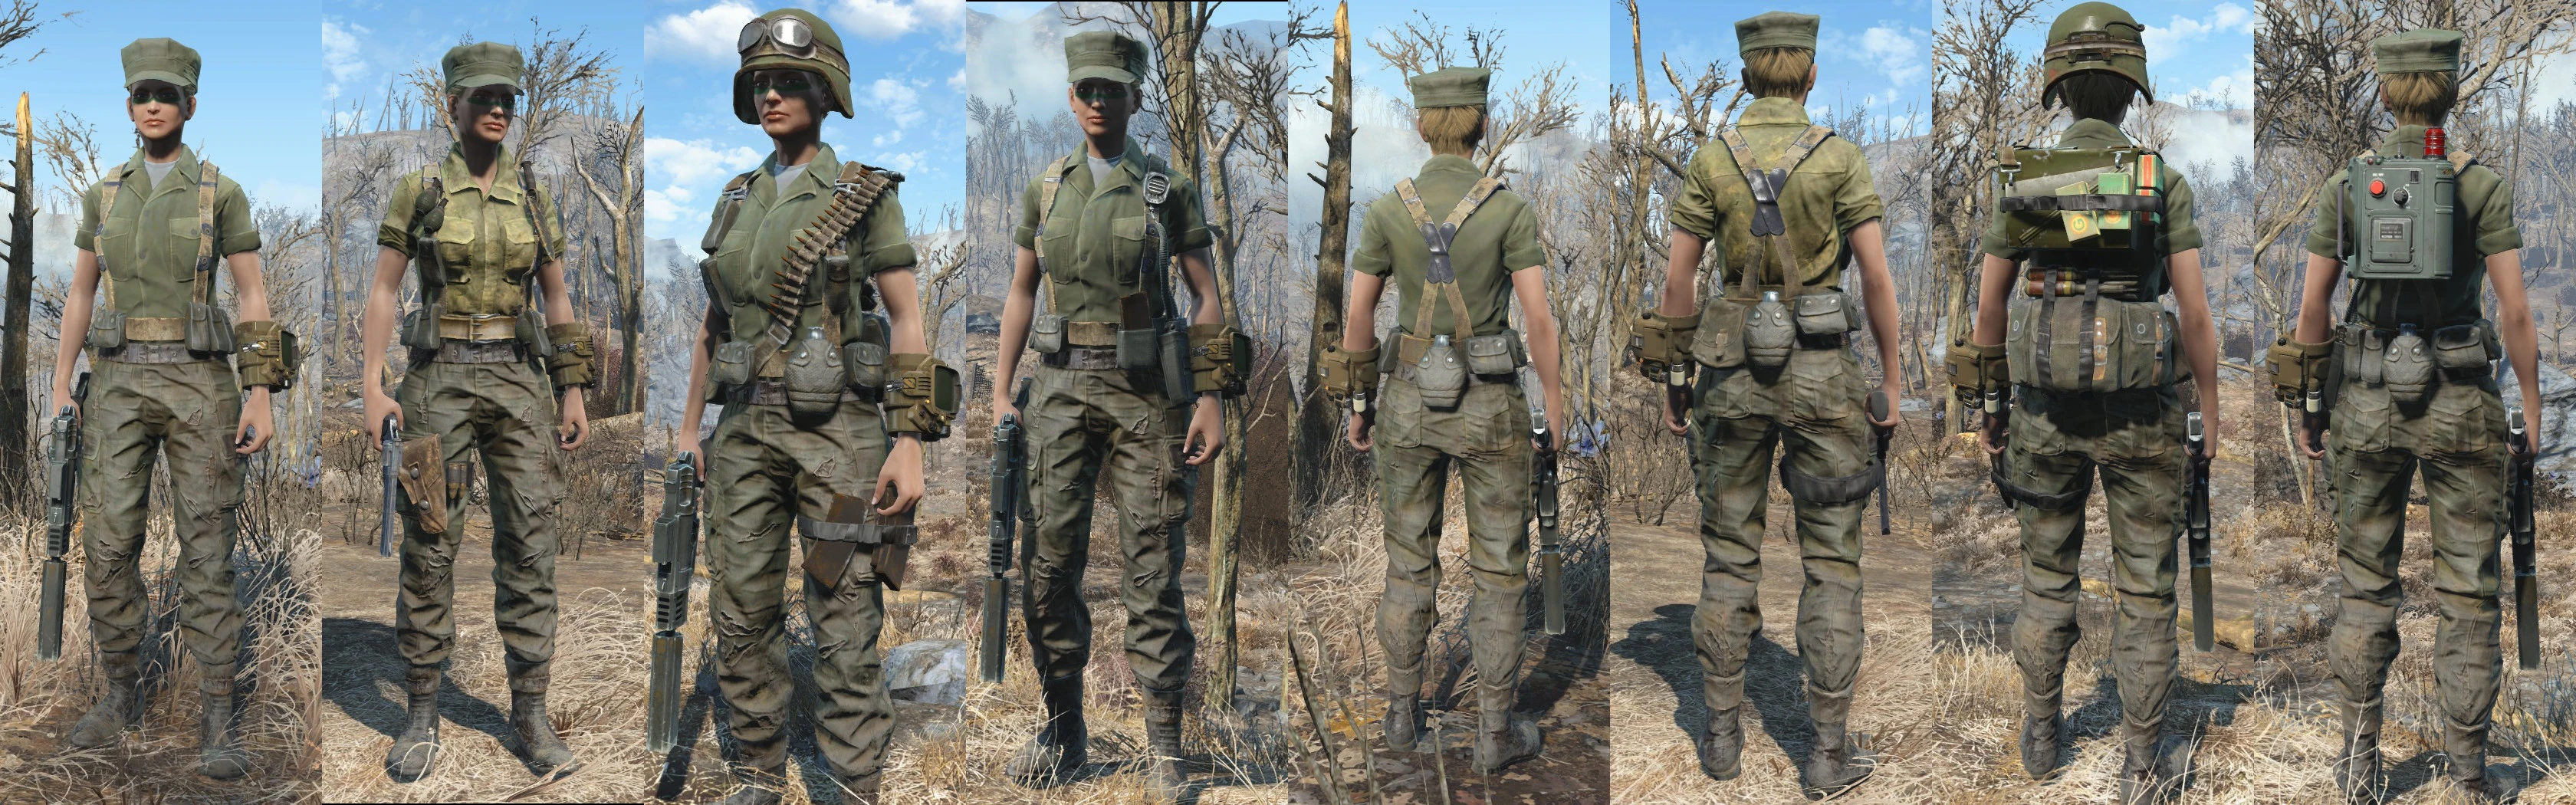 Fallout 4 army helmet фото 98